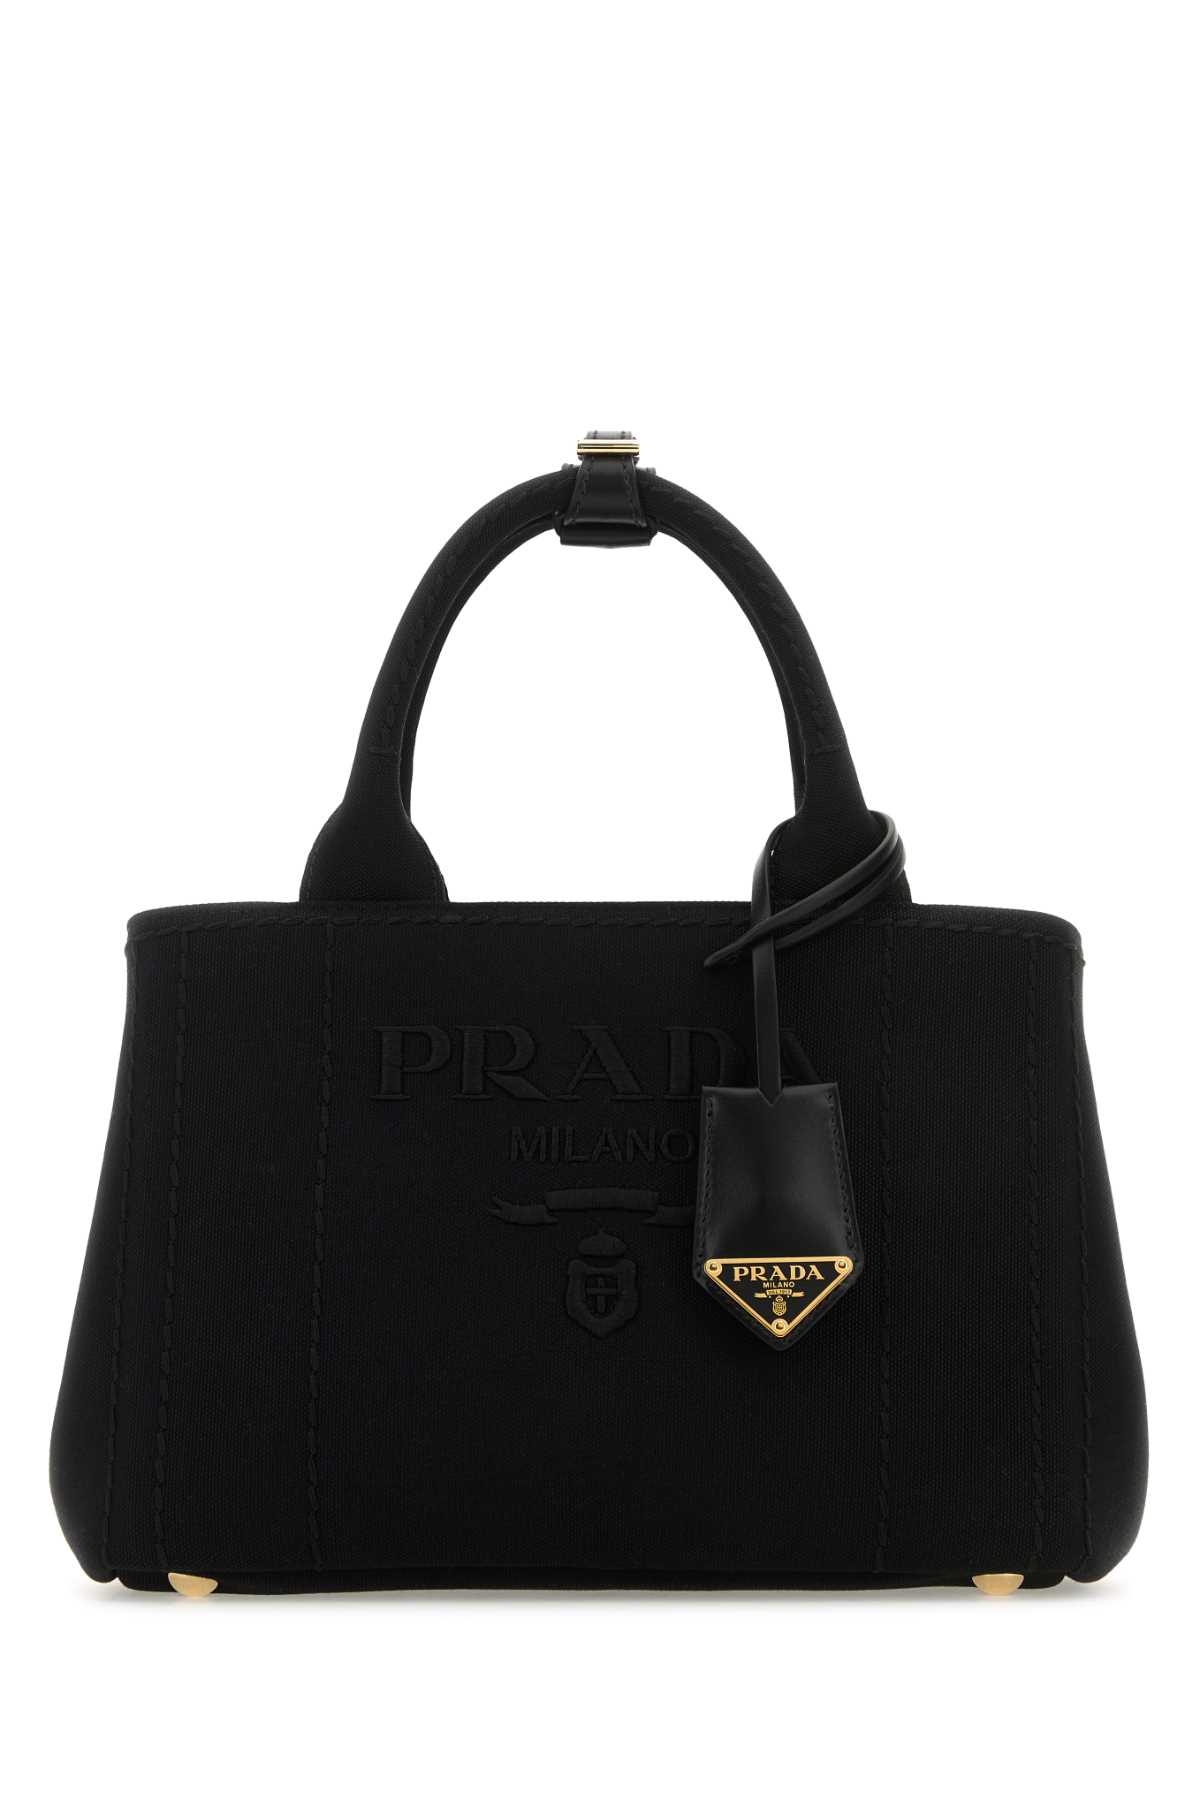 Prada Black Canvas Shopping Bag